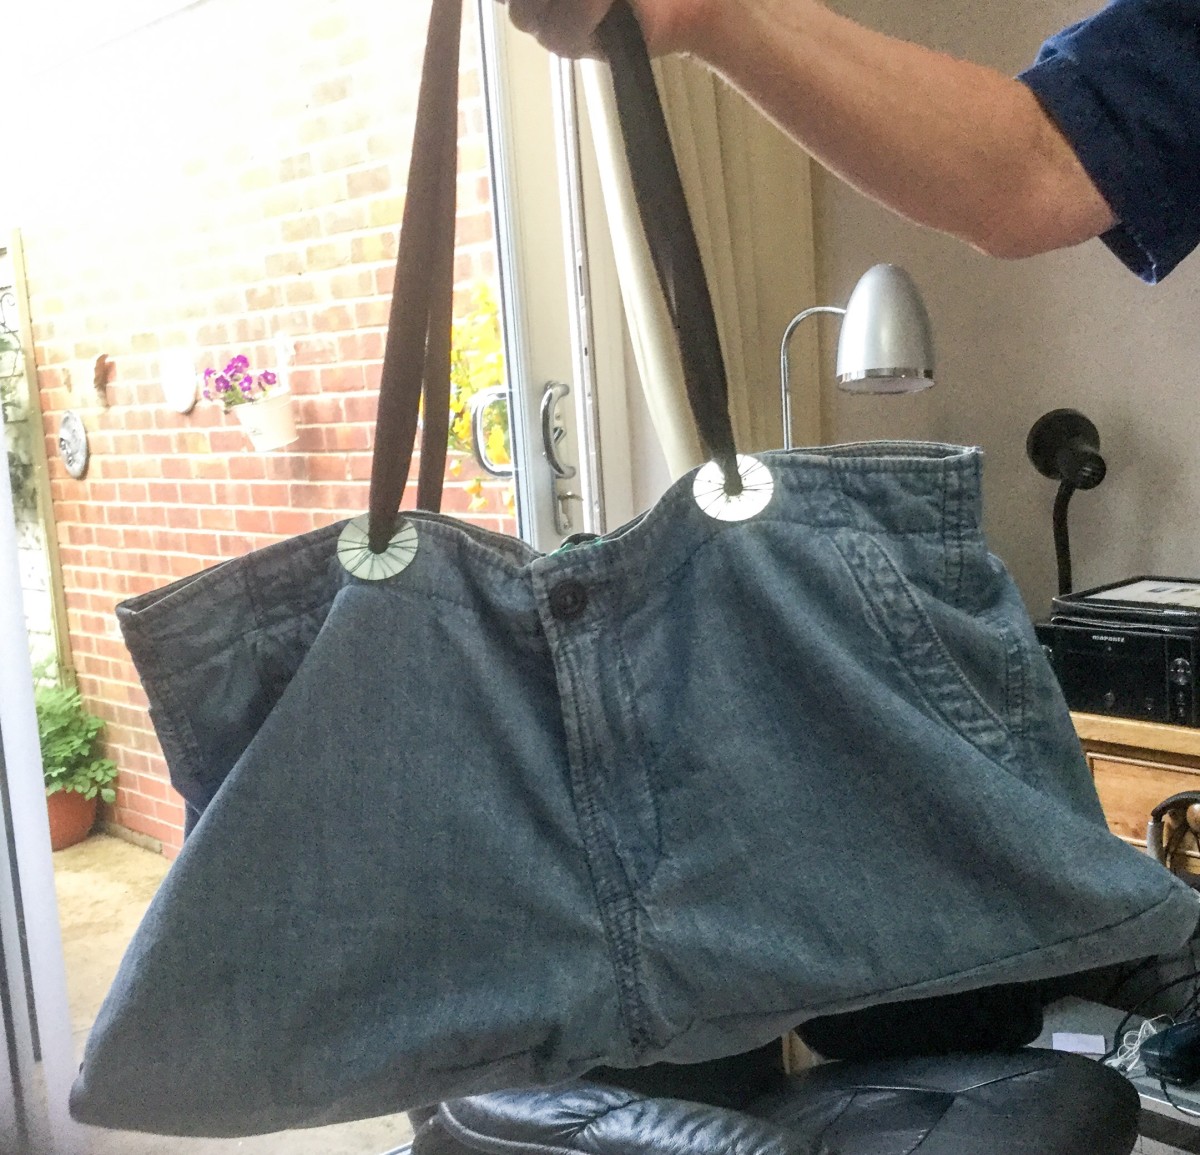 ashford handicrafts - Recycled Denim Bag